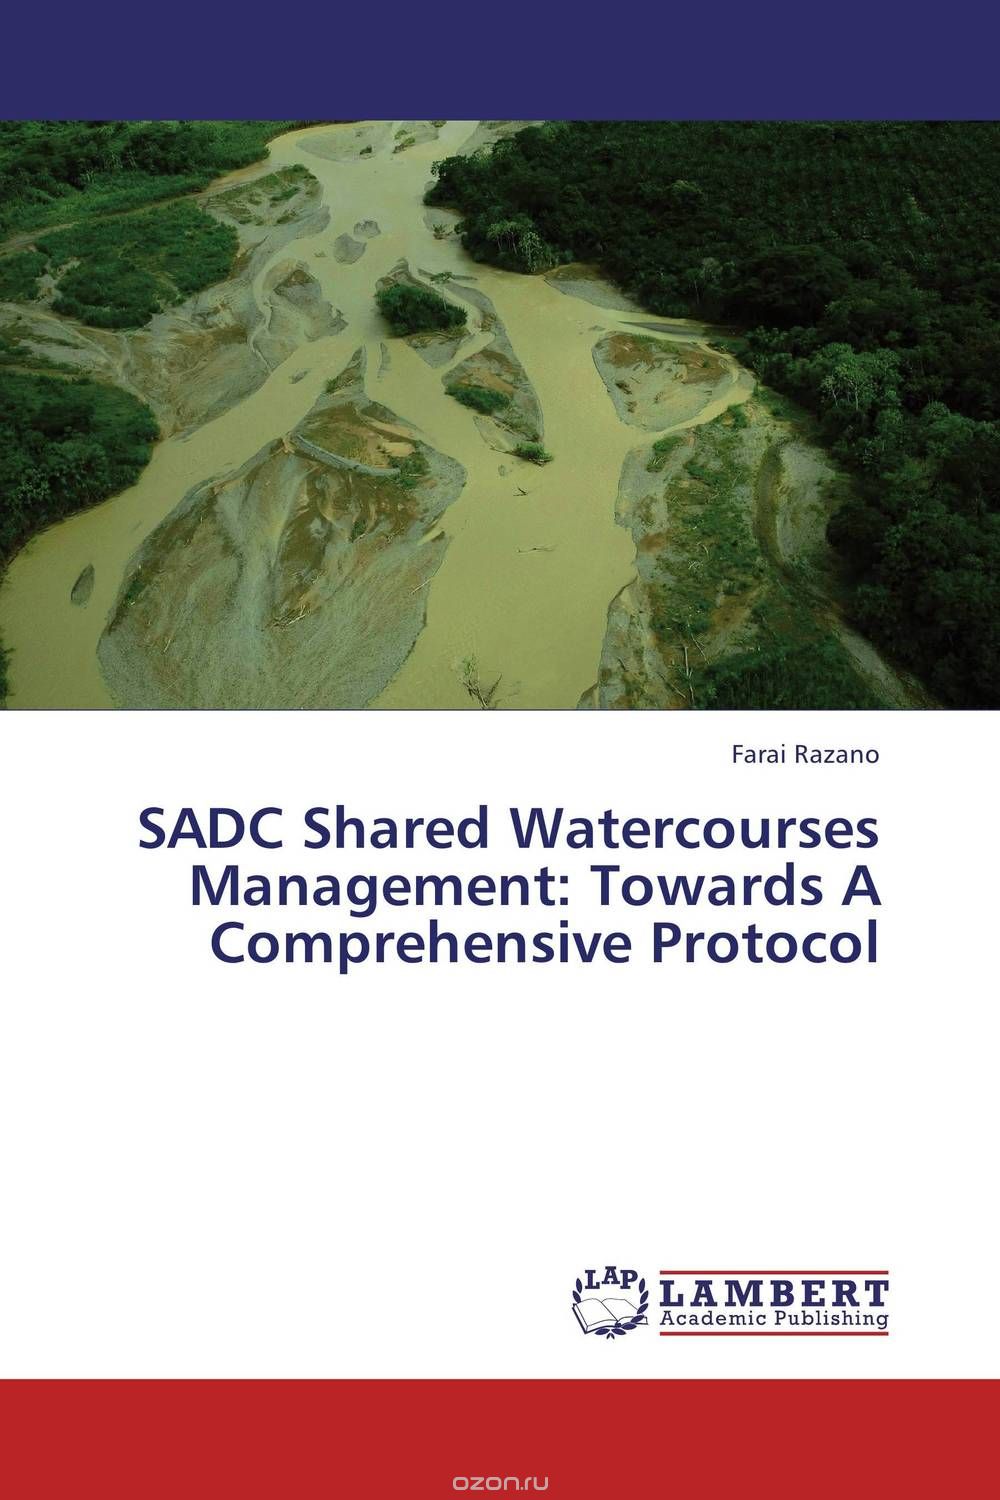 Скачать книгу "SADC Shared Watercourses Management: Towards A Comprehensive Protocol"